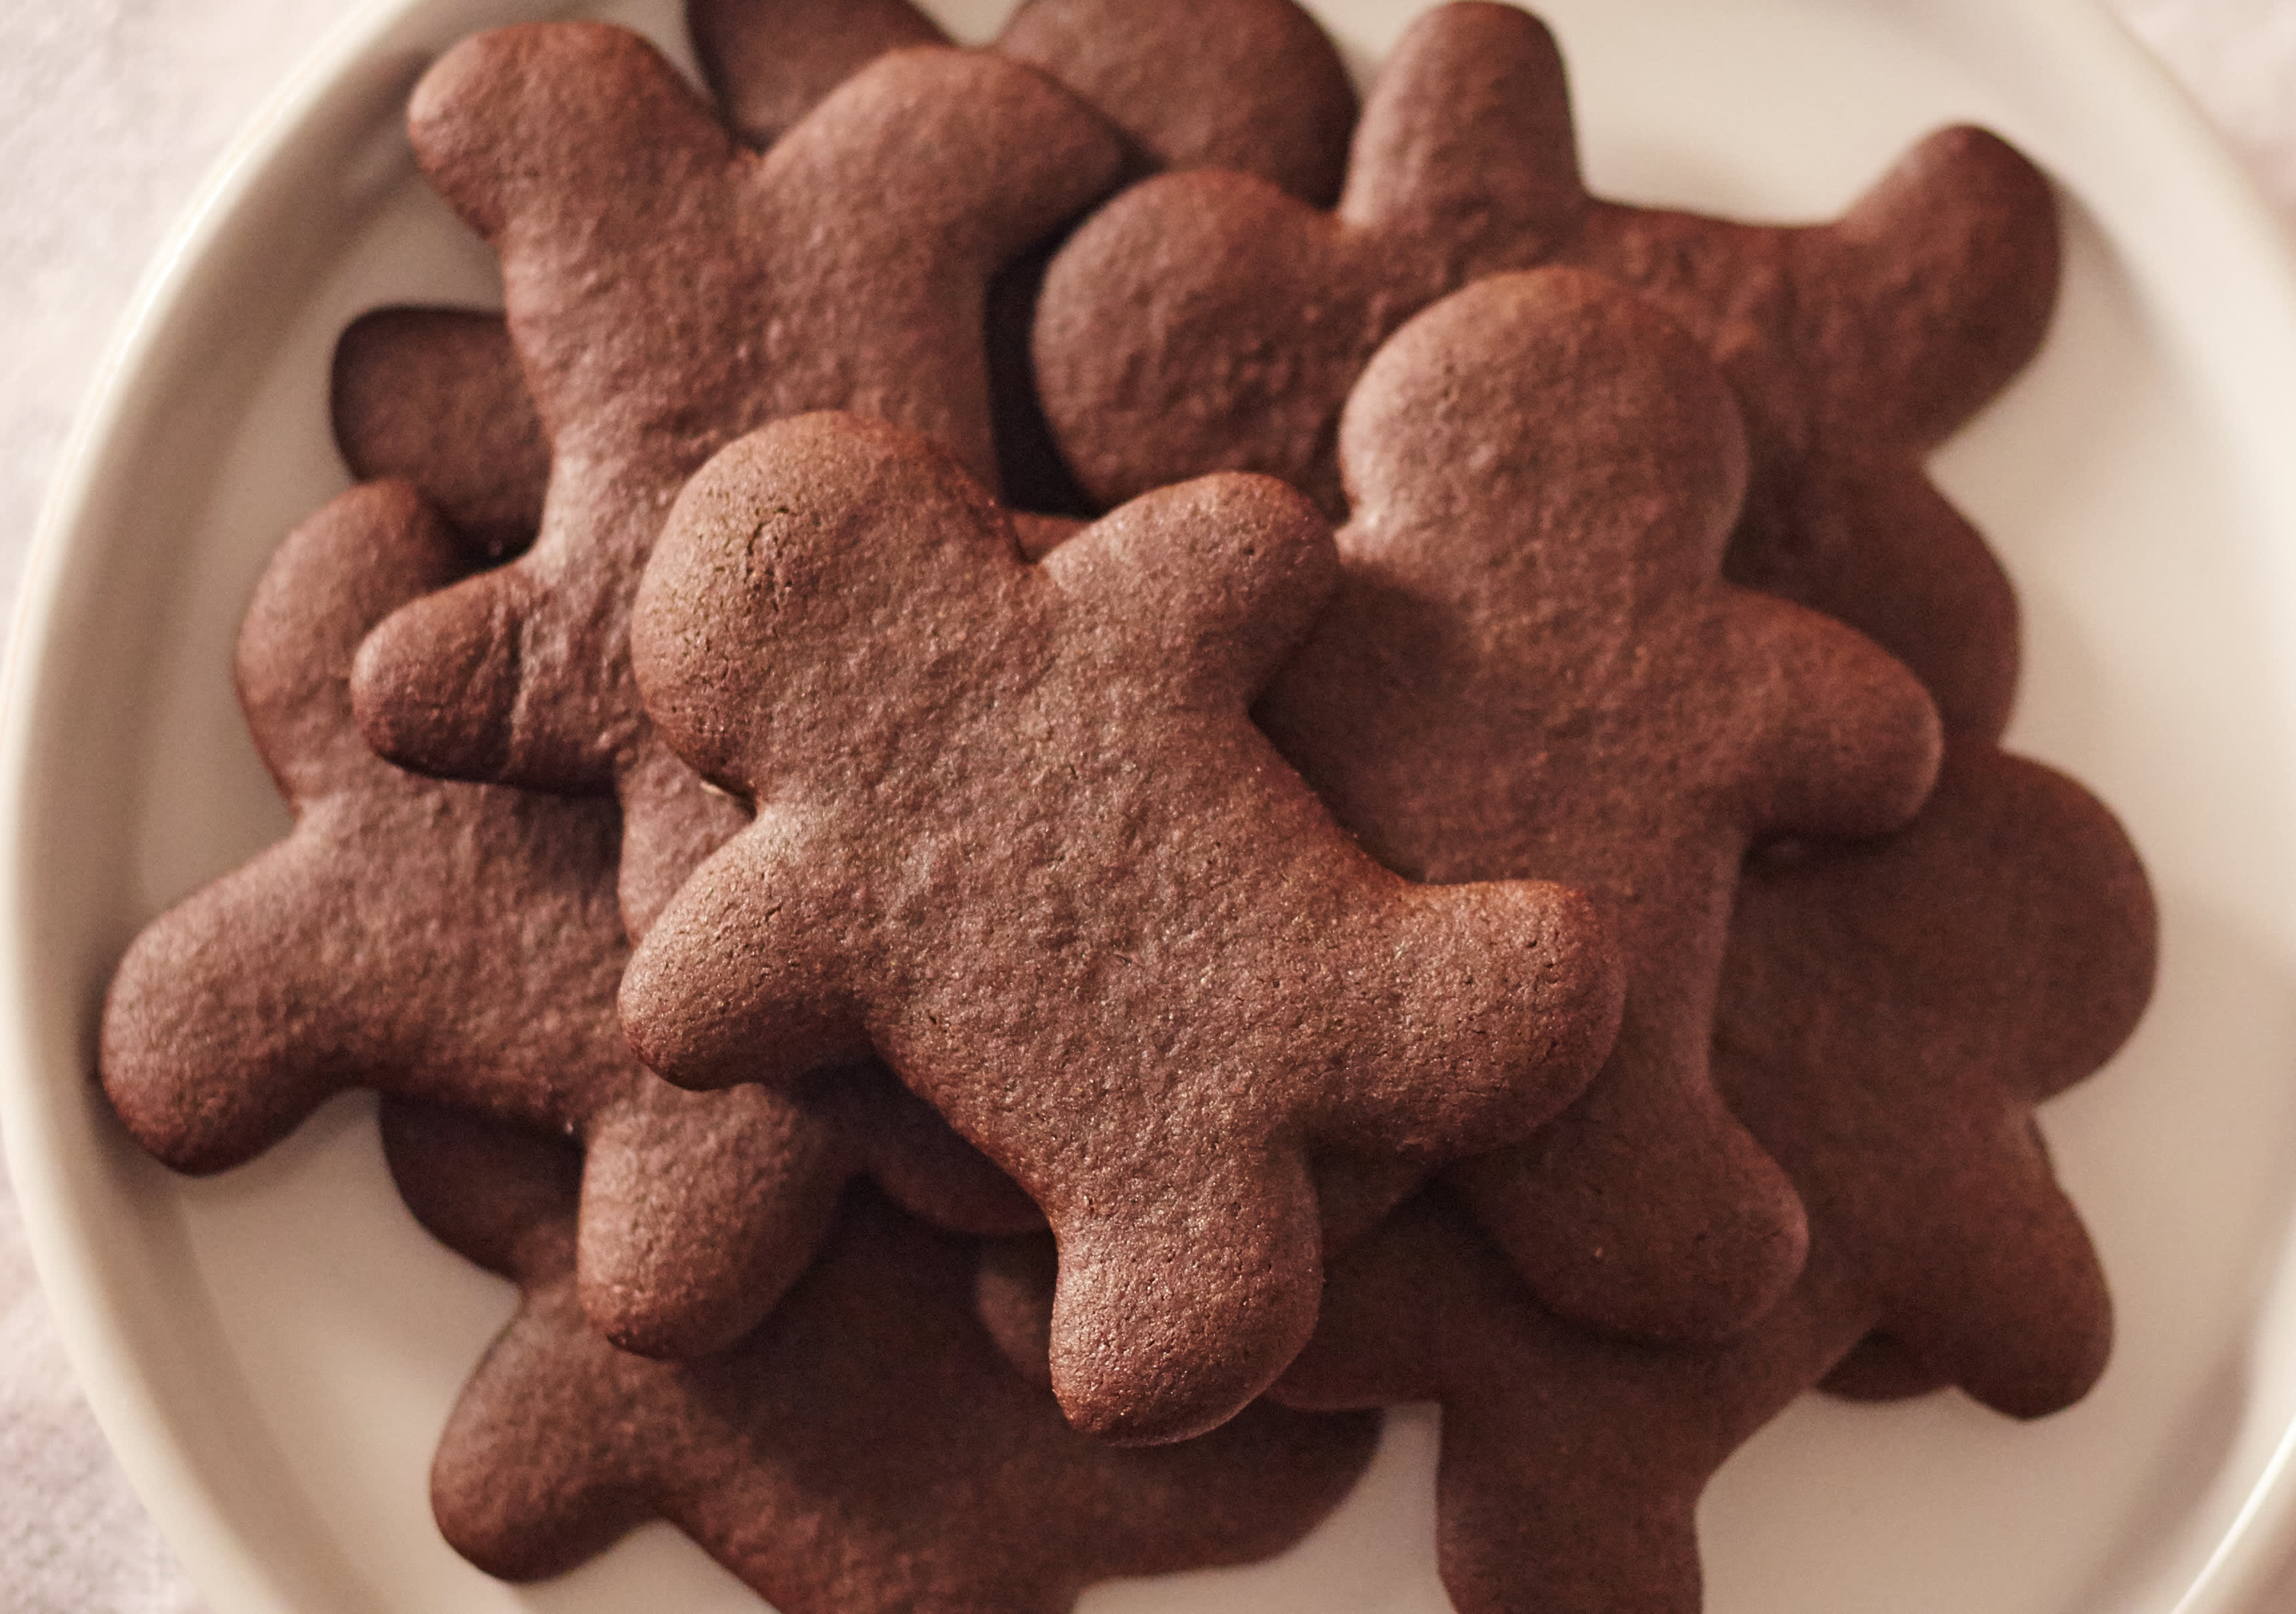 Need a good Christmas breakfast idea? Make fluffy snowflake and gingerbread  men waffles